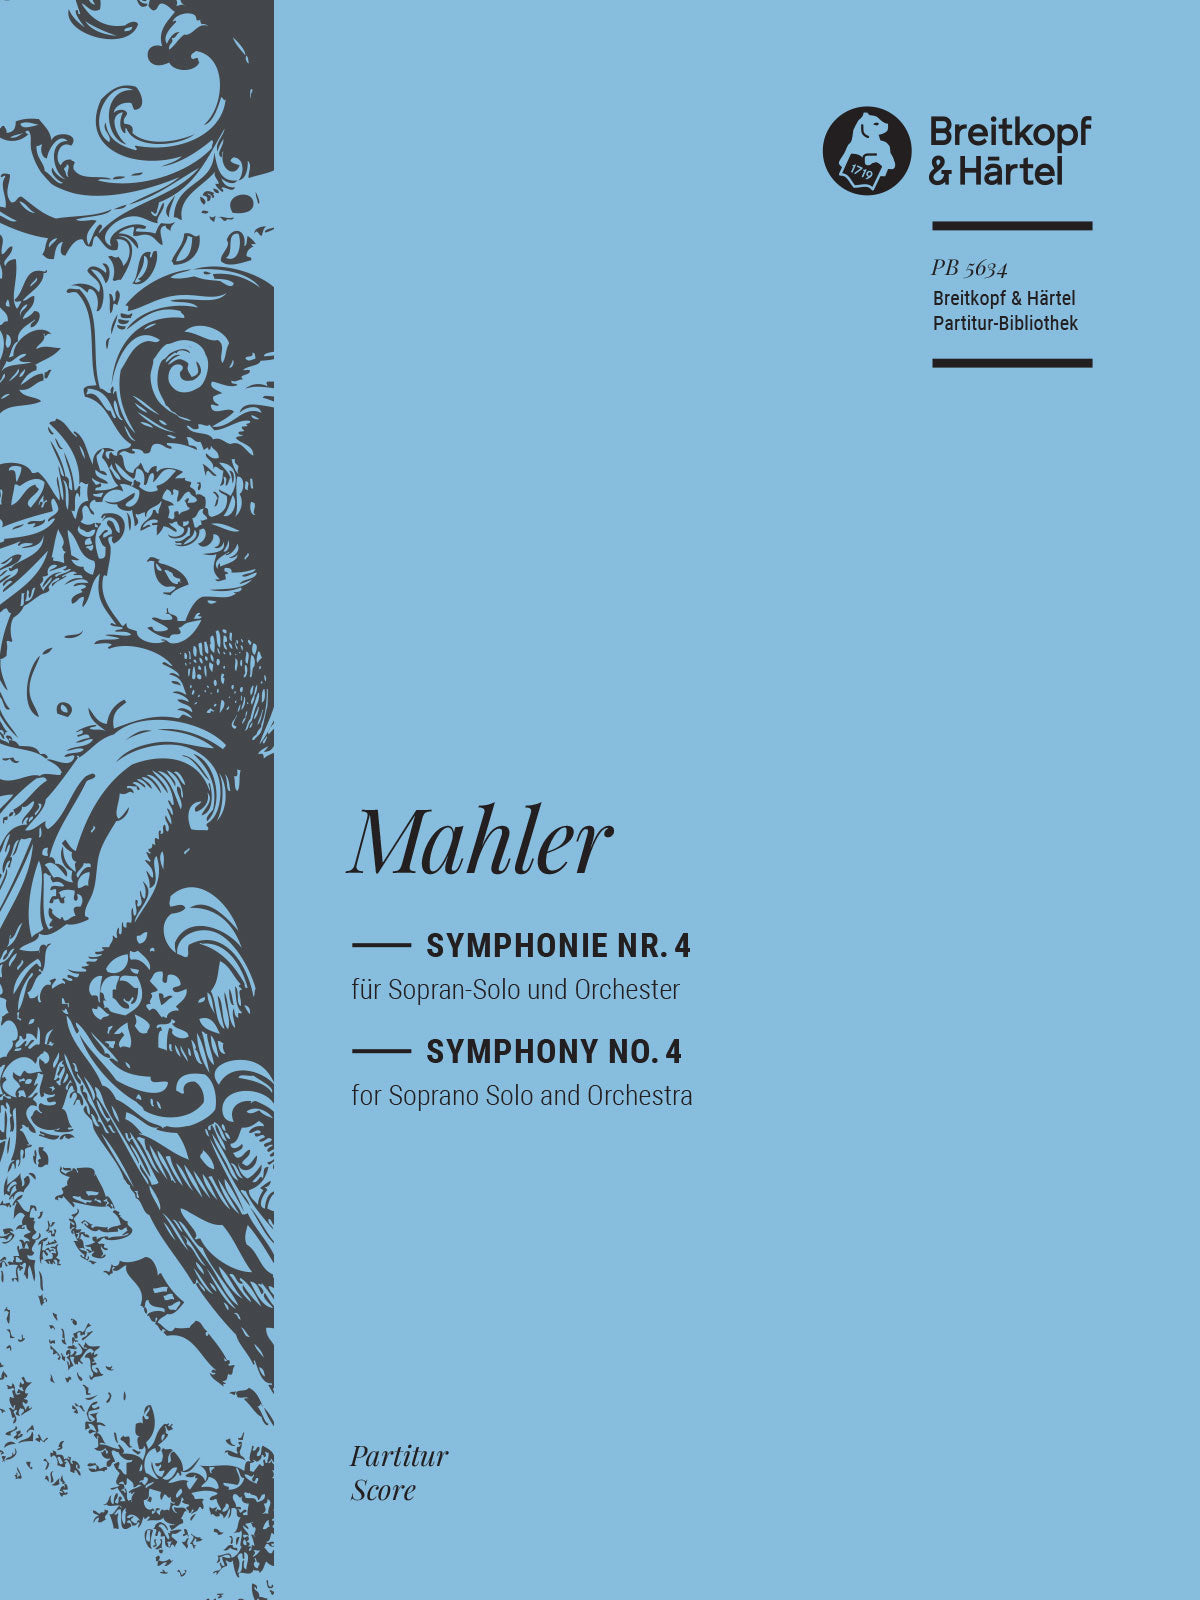 Mahler Symphony No 4 FS